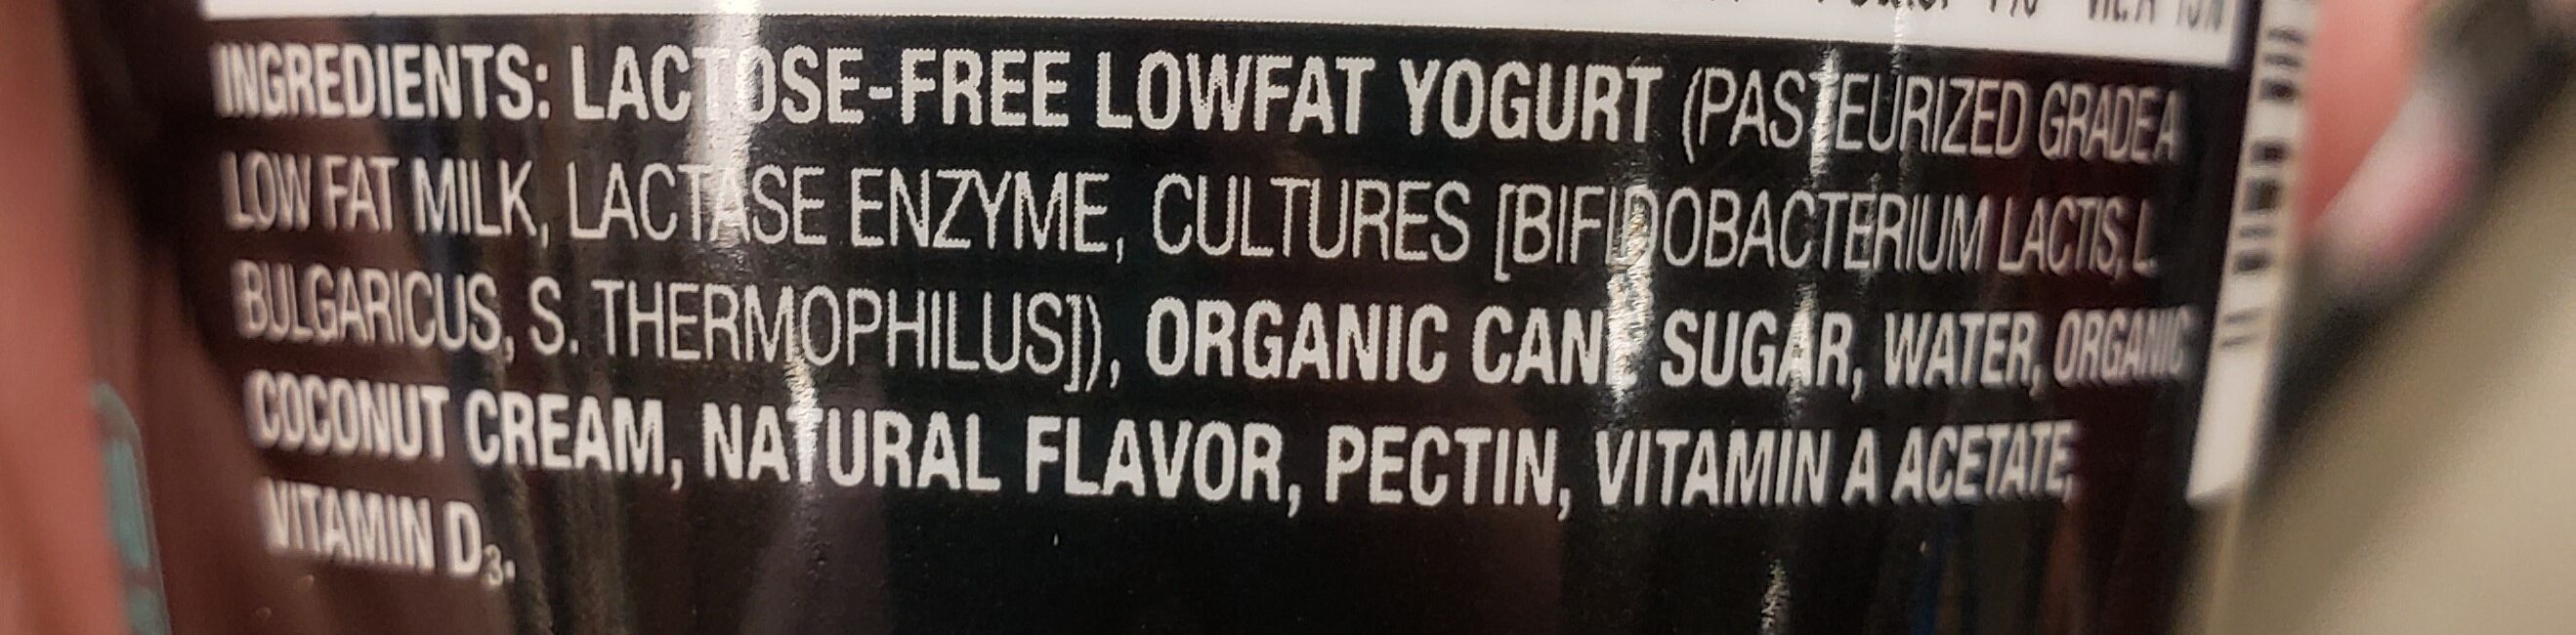 Coconut lowfat yogurt, coconut - Ingredients